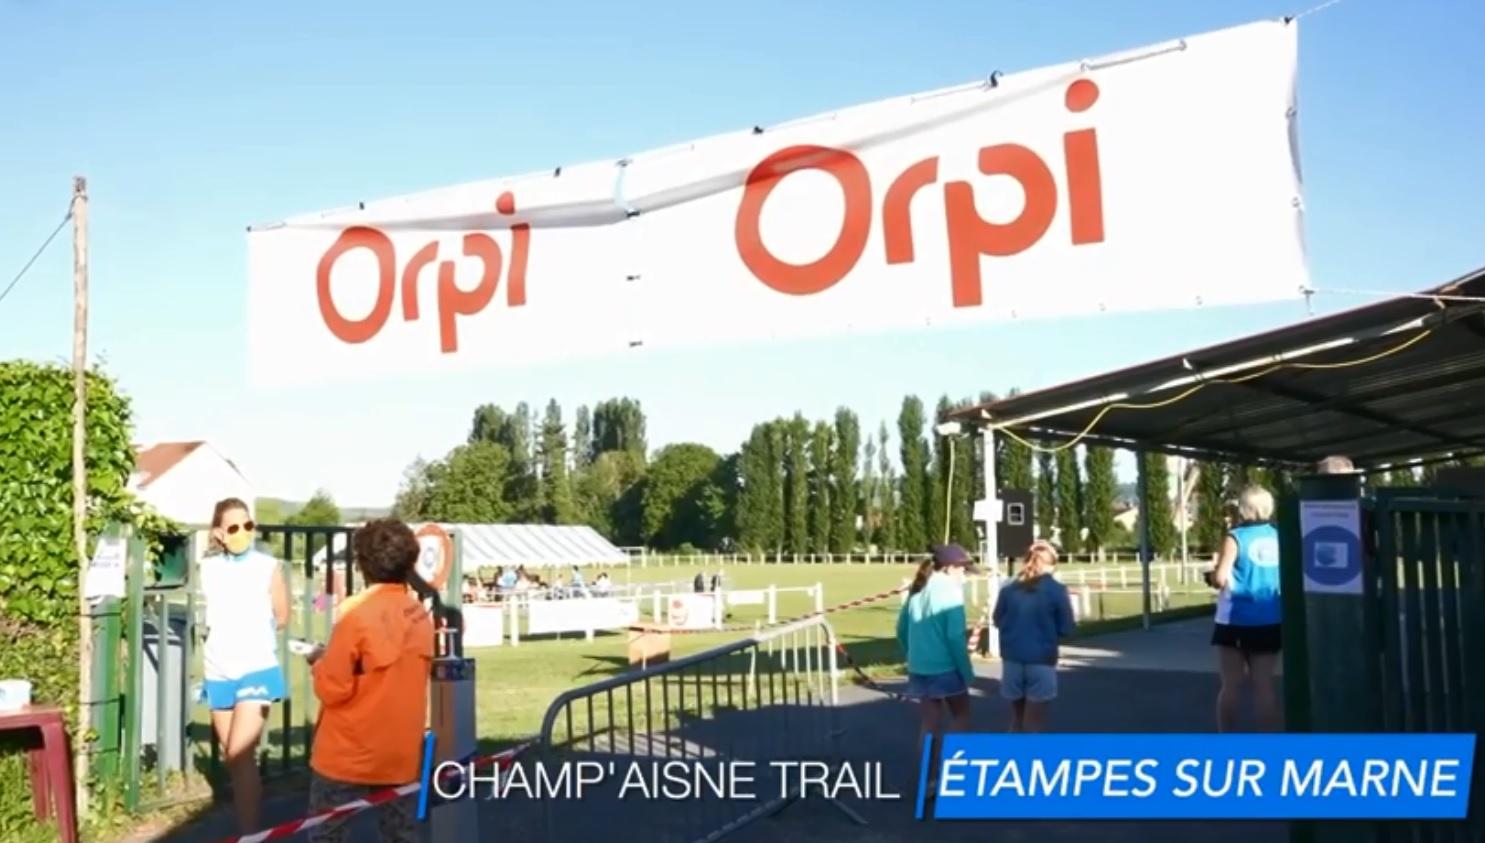 Champ trail video 2021 orpi